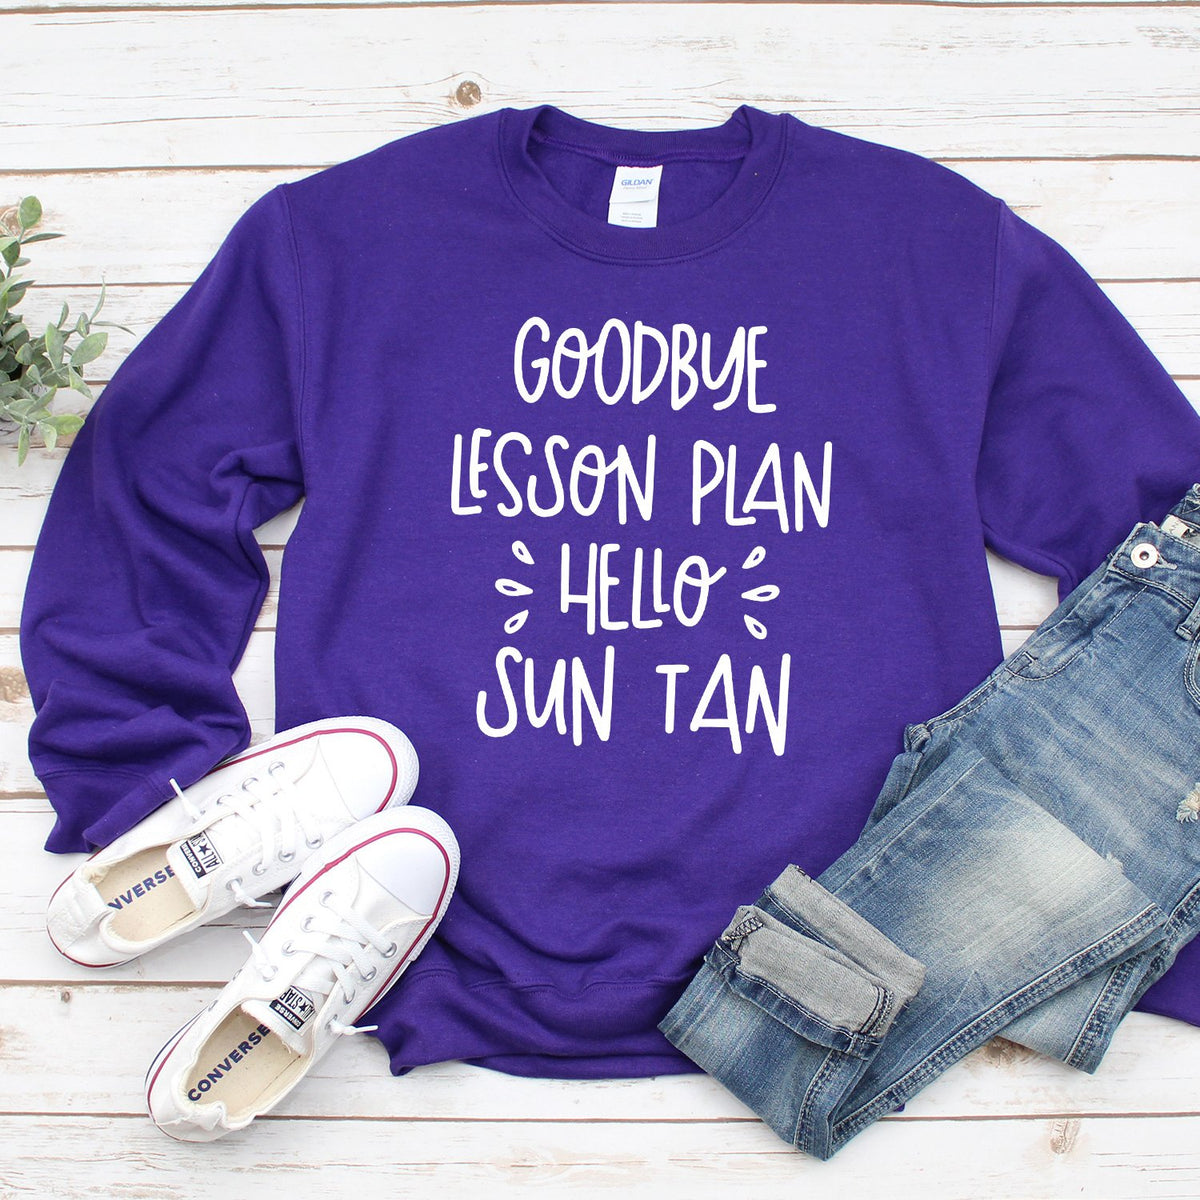 Goodbye Lesson Plan Hello Sun Tan - Long Sleeve Heavy Crewneck Sweatshirt